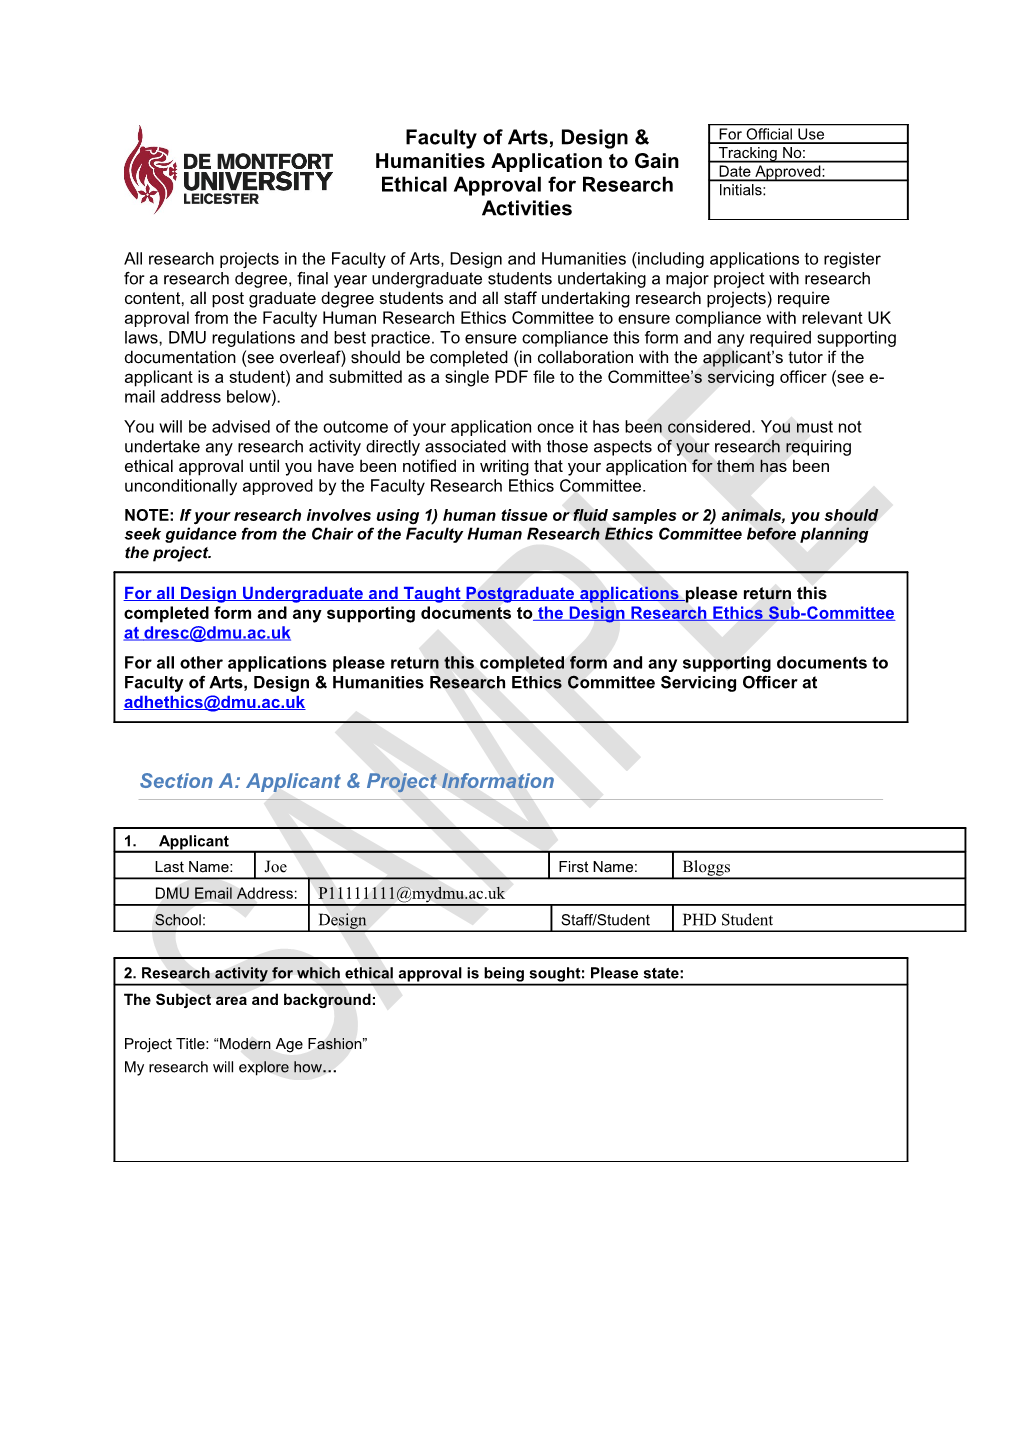 ADH Sample Application Form